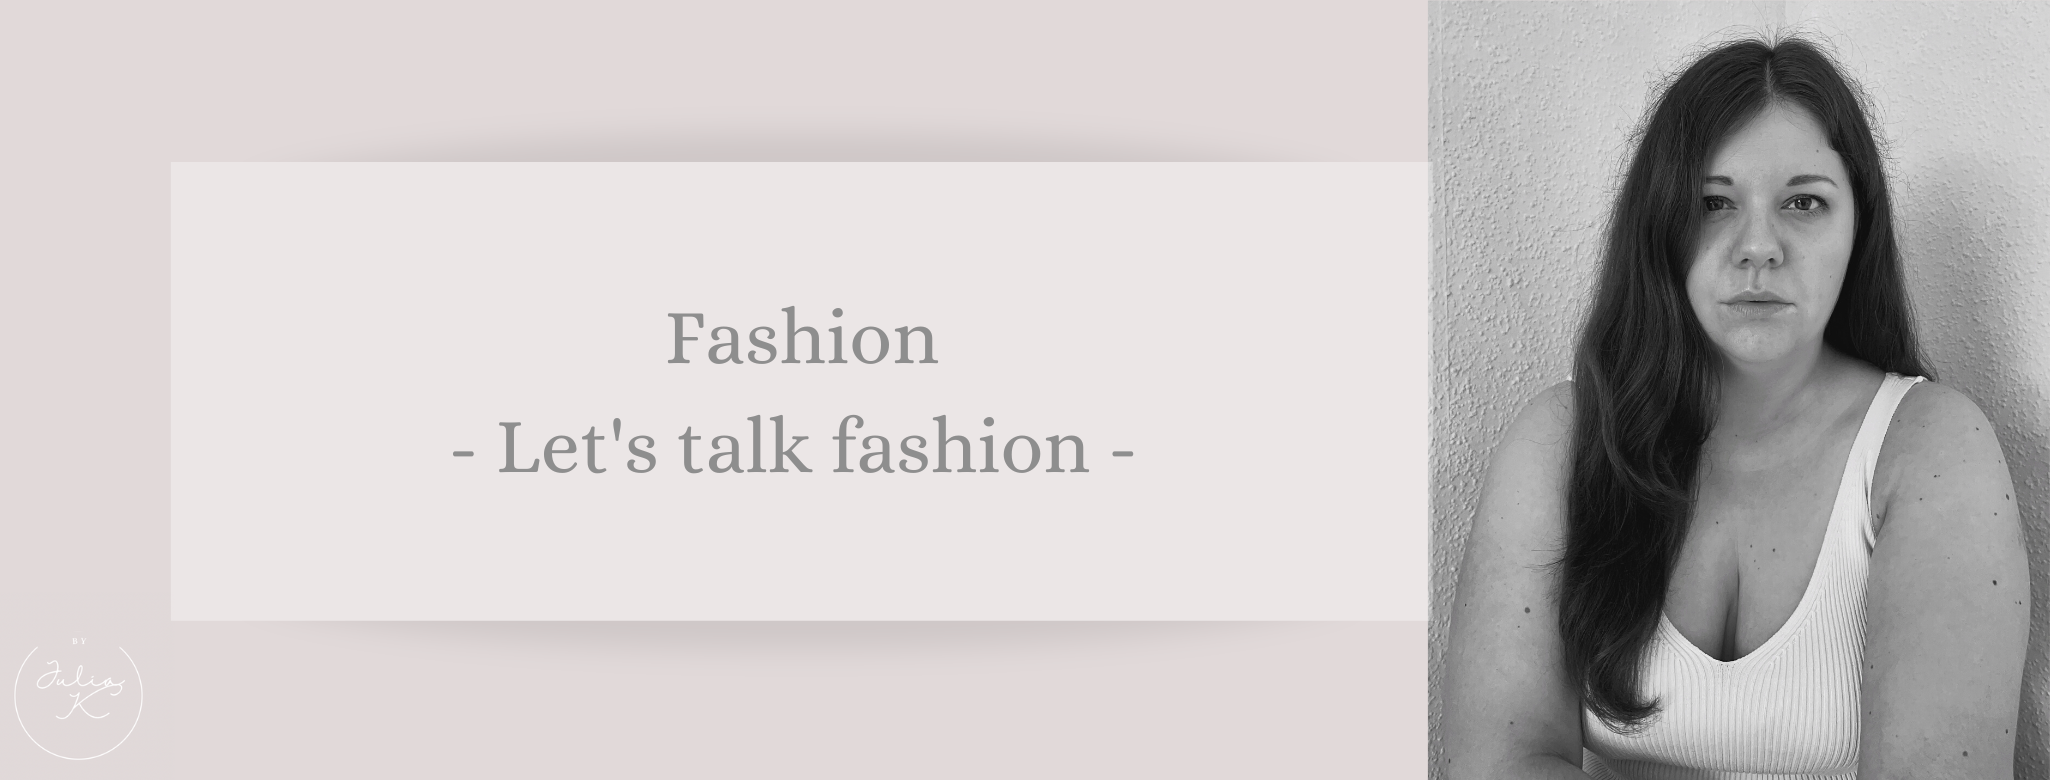 Fashion: Let’s talk fashion